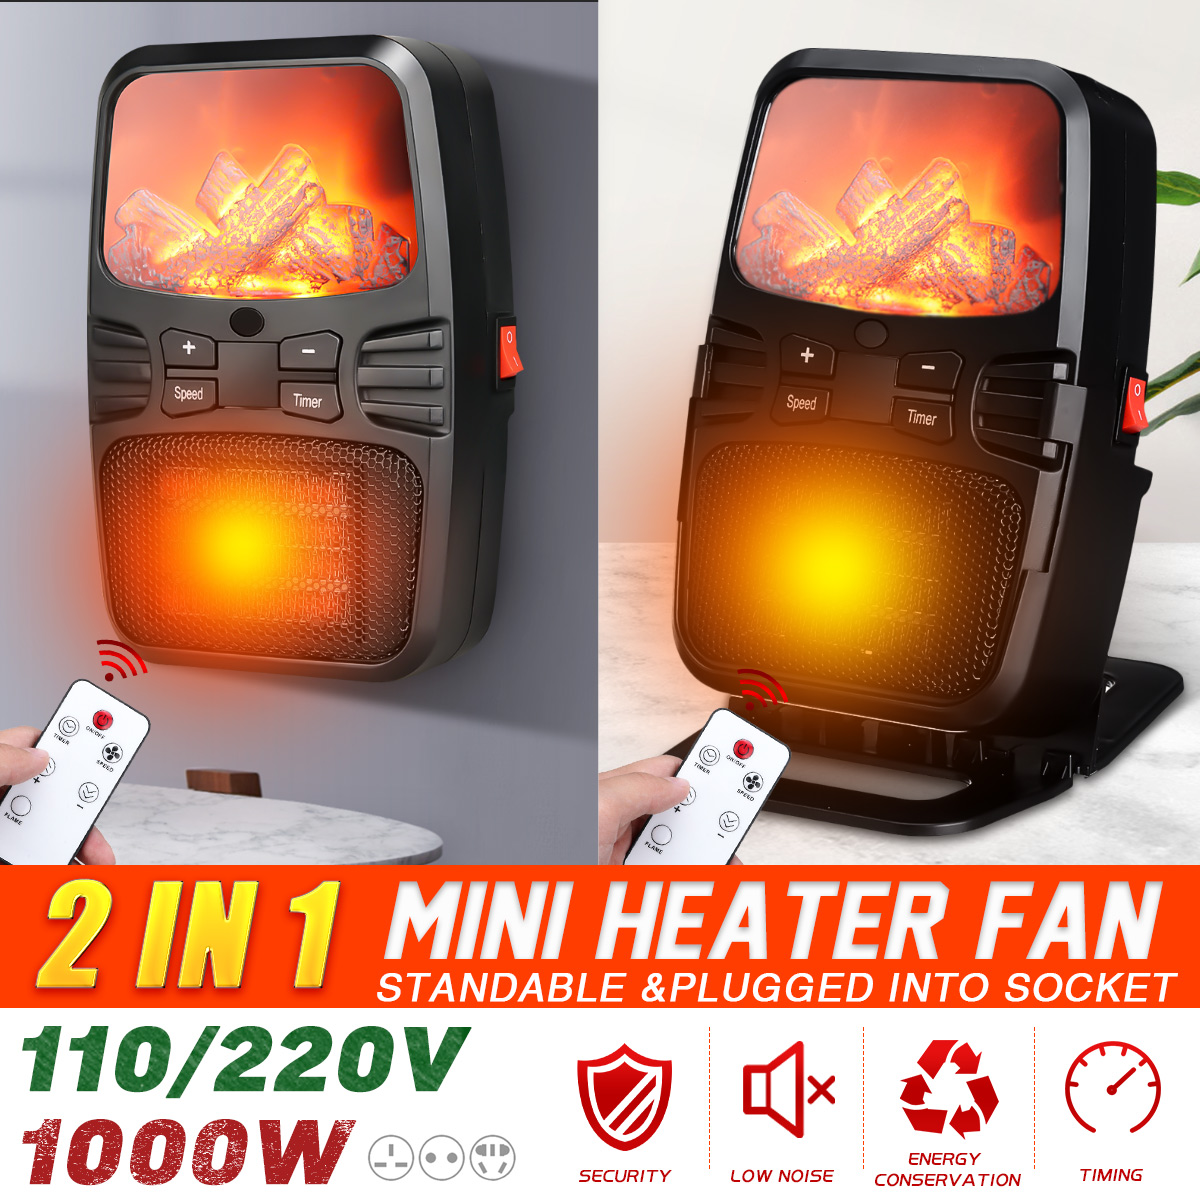 IPReereg-1000W-Portable-Mini-Electric-Heater-Fan-Fireplace-Flame-Timer-Air-Warmer-Home-Outdoor-Heate-1578916-1